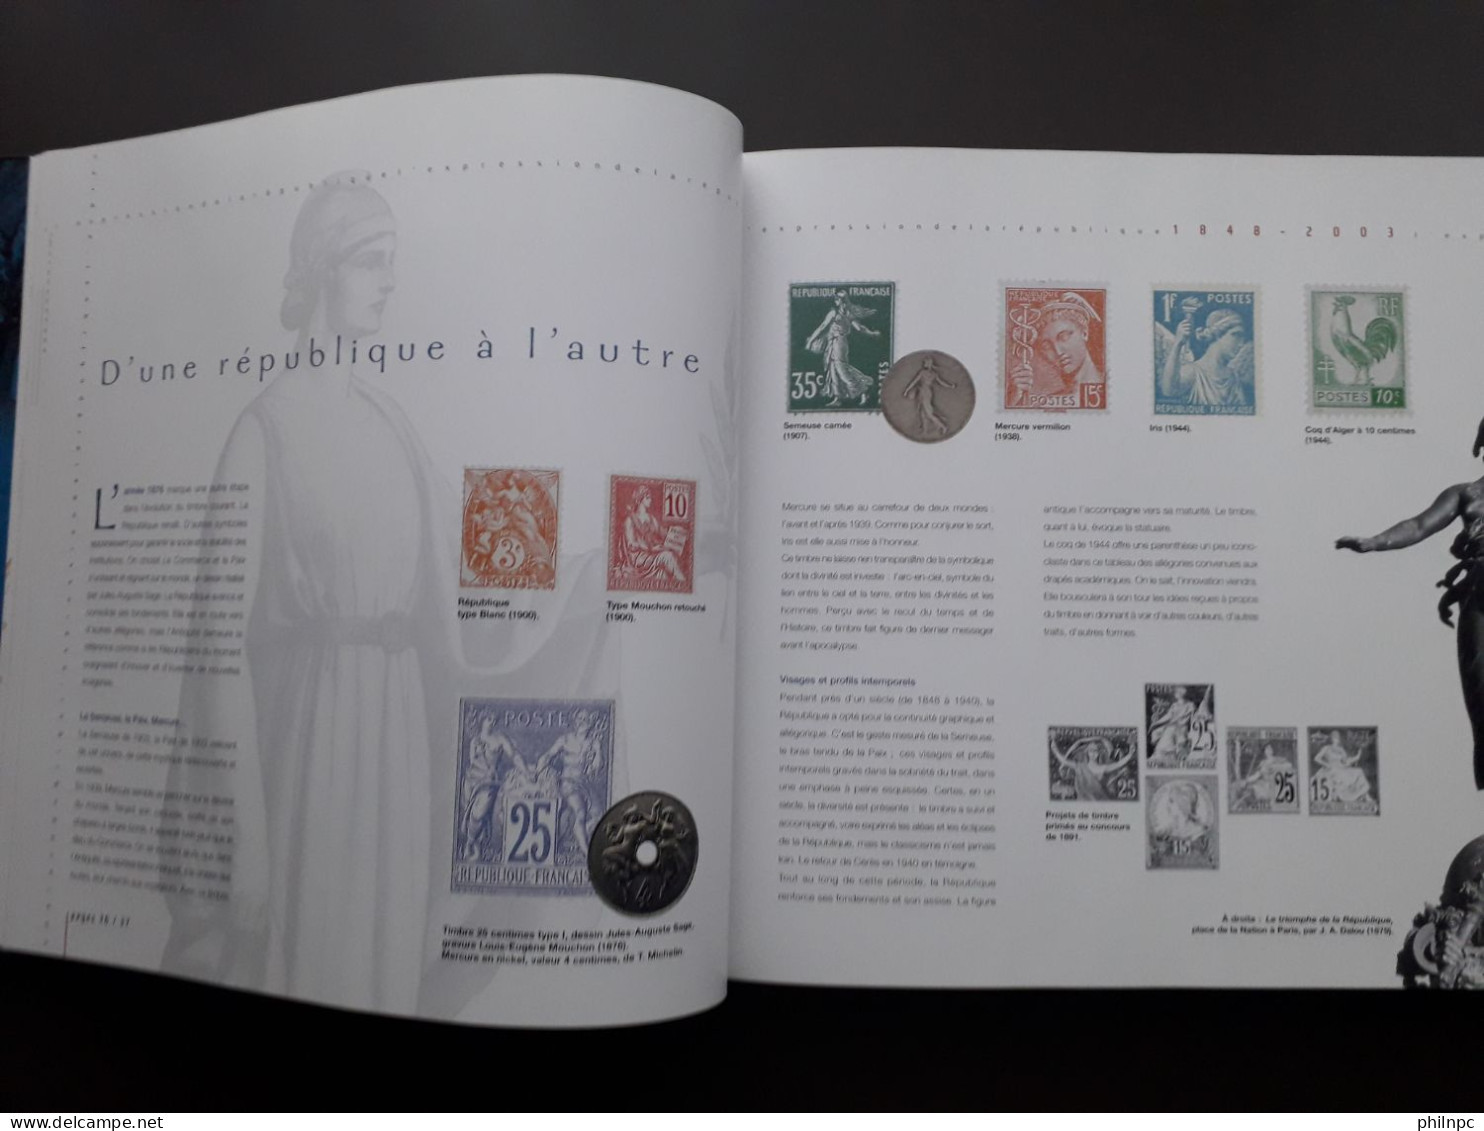 France, Carnet, Ouvrage de Luxe, 4003, Livre Impressions Expressions, 3585, Neuf **, TTB, Kandinsky